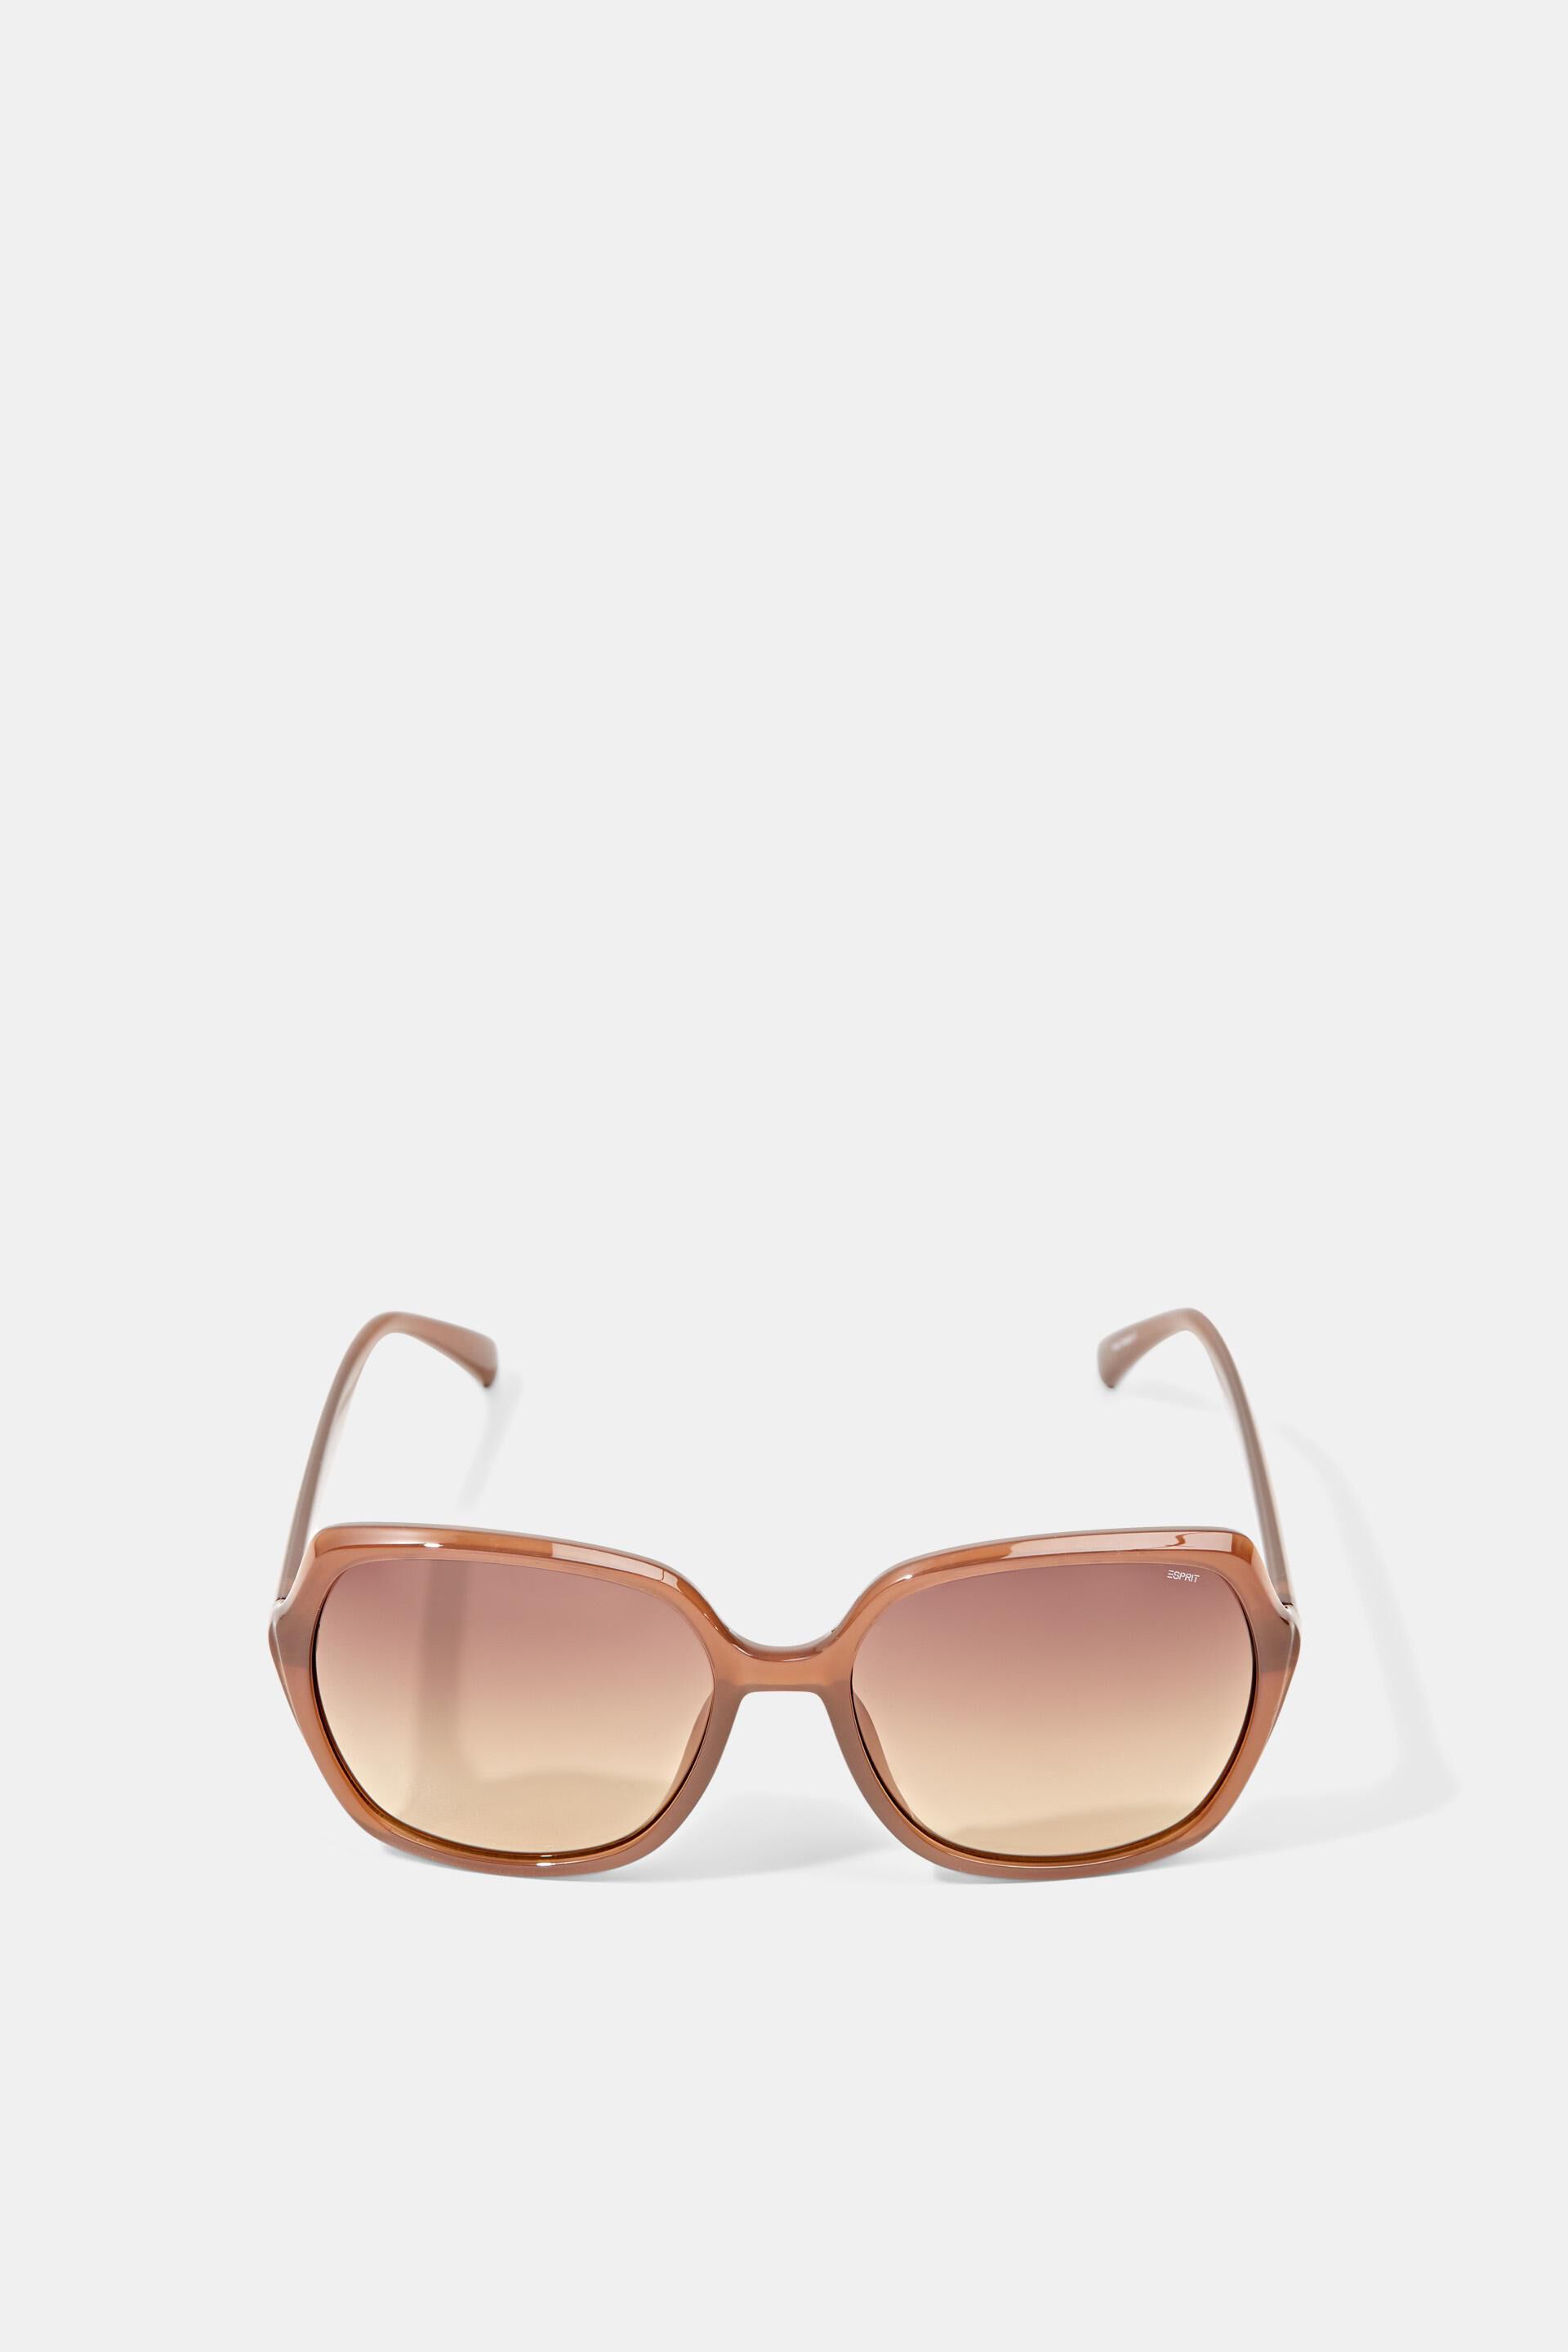 Esprit Online Store Statement sunglasses with large lenses